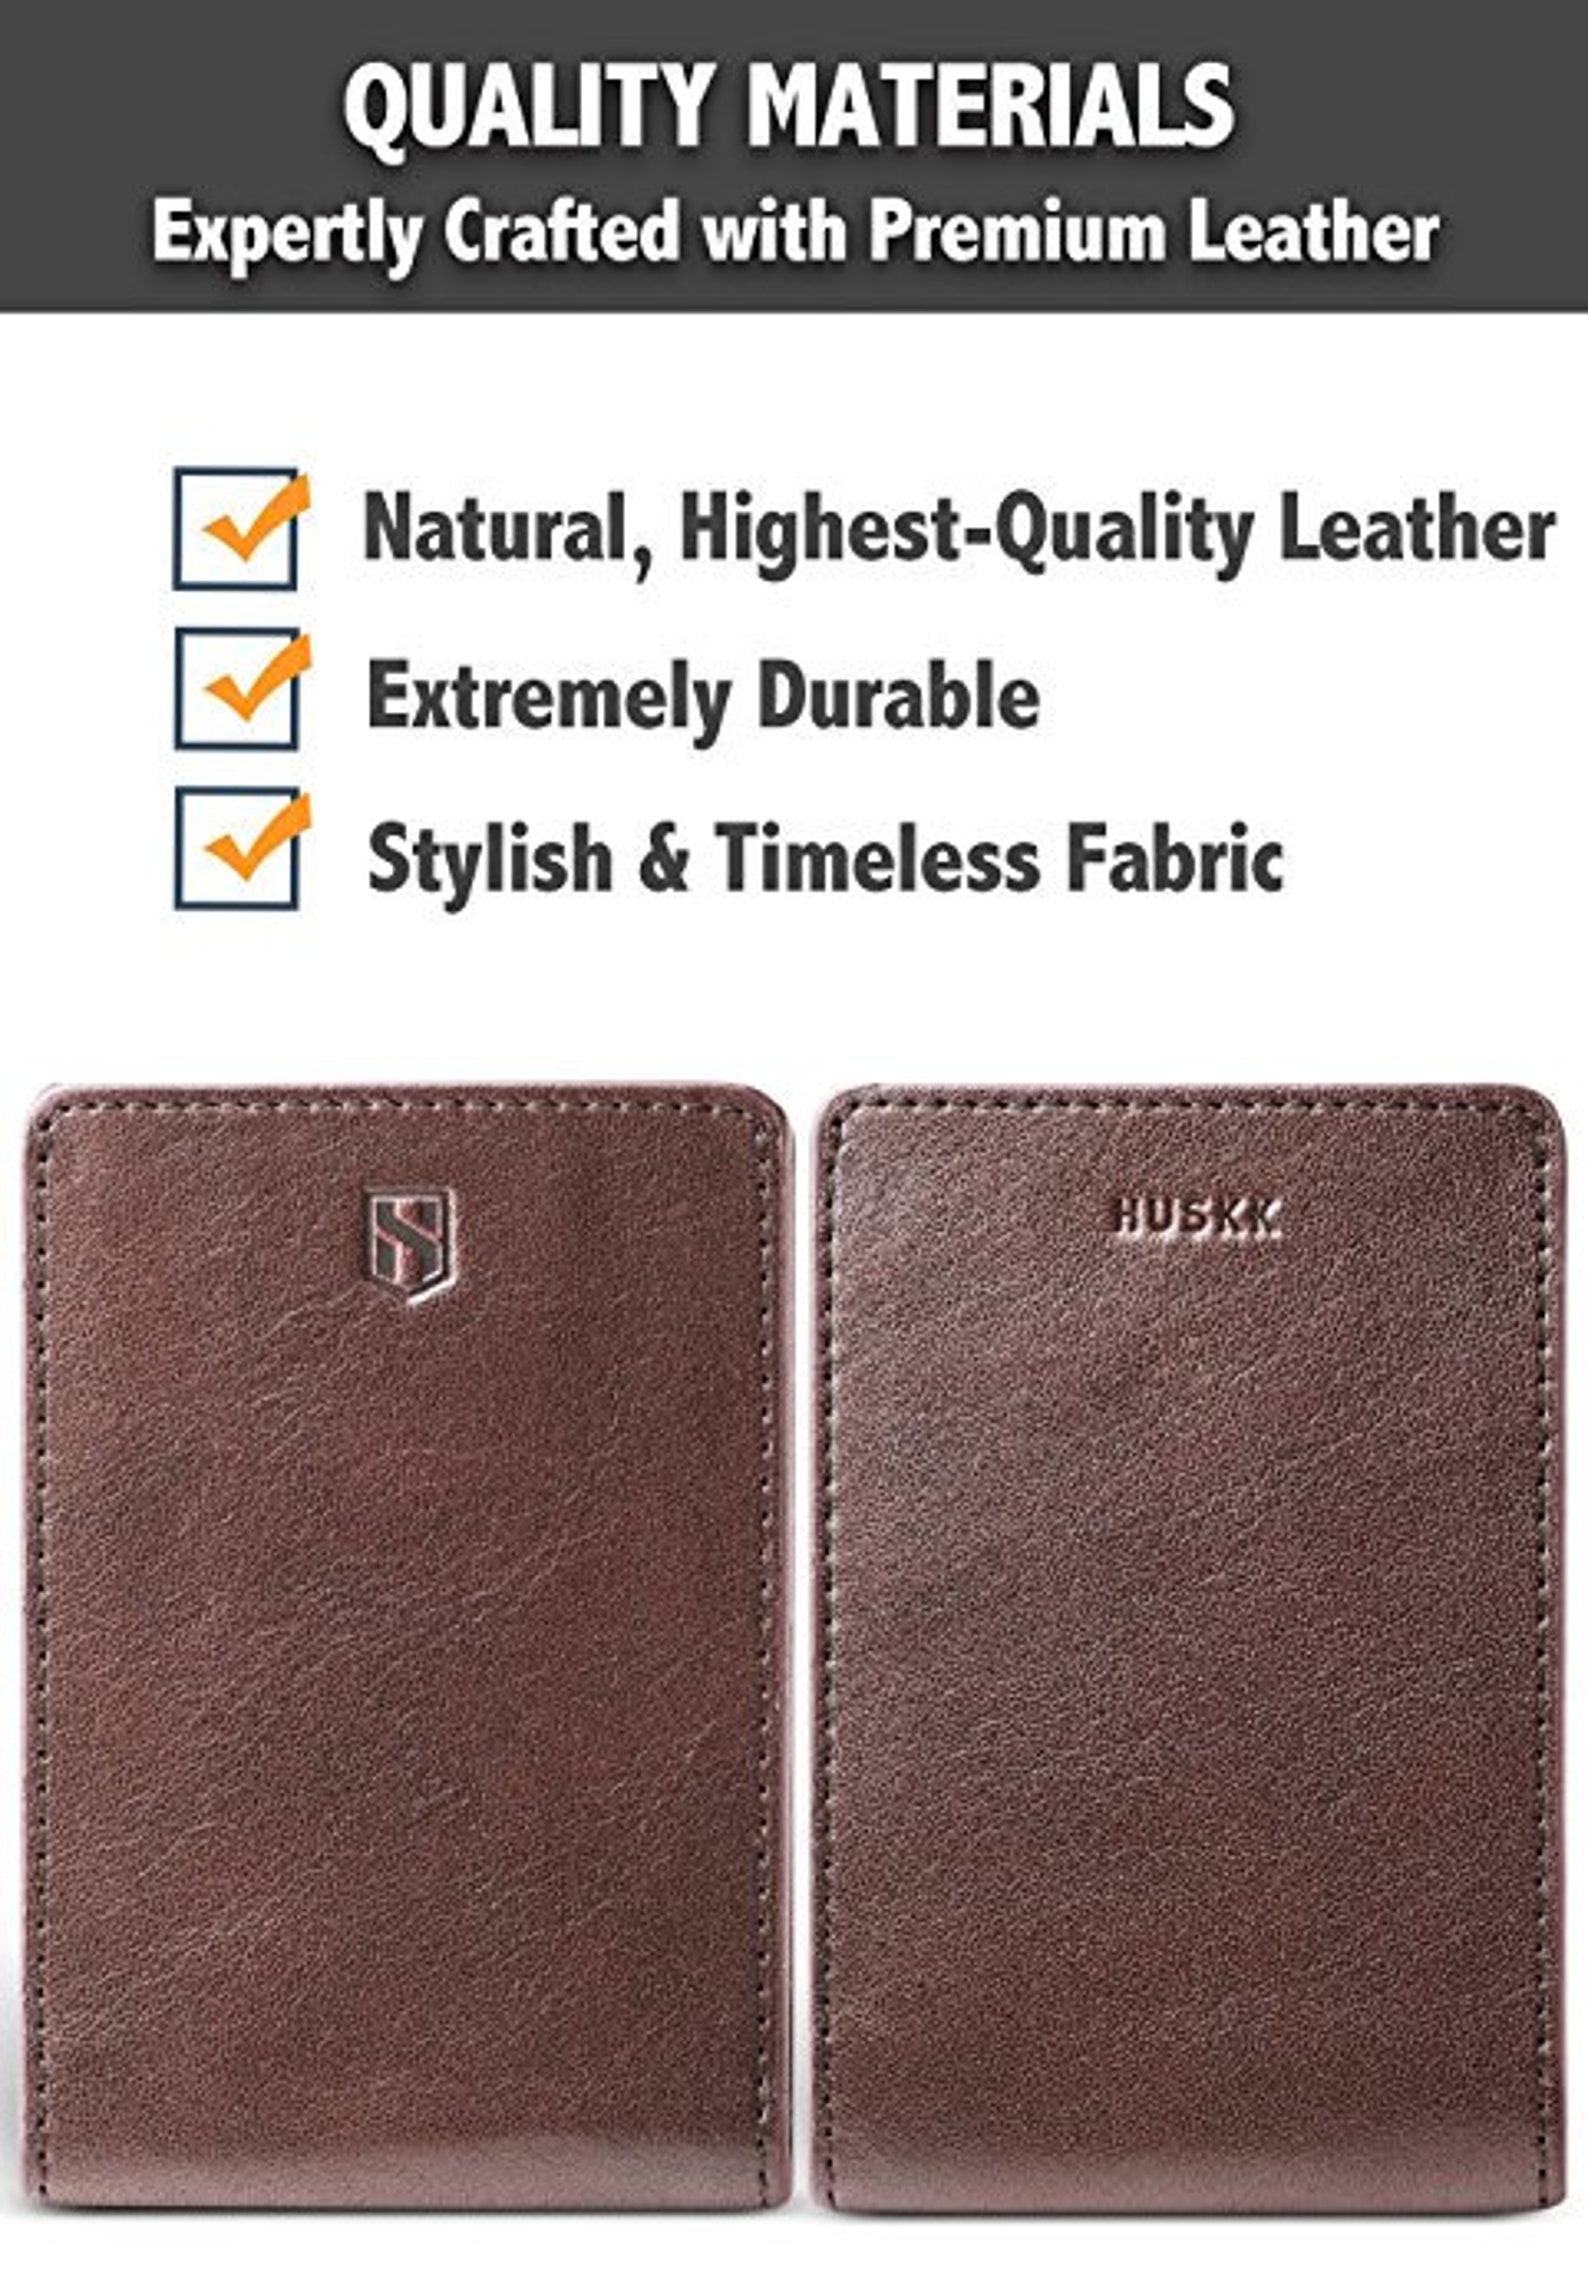 HUSKK Leather Wallet for Men Credit Card Sleeve Holder With | Etsy